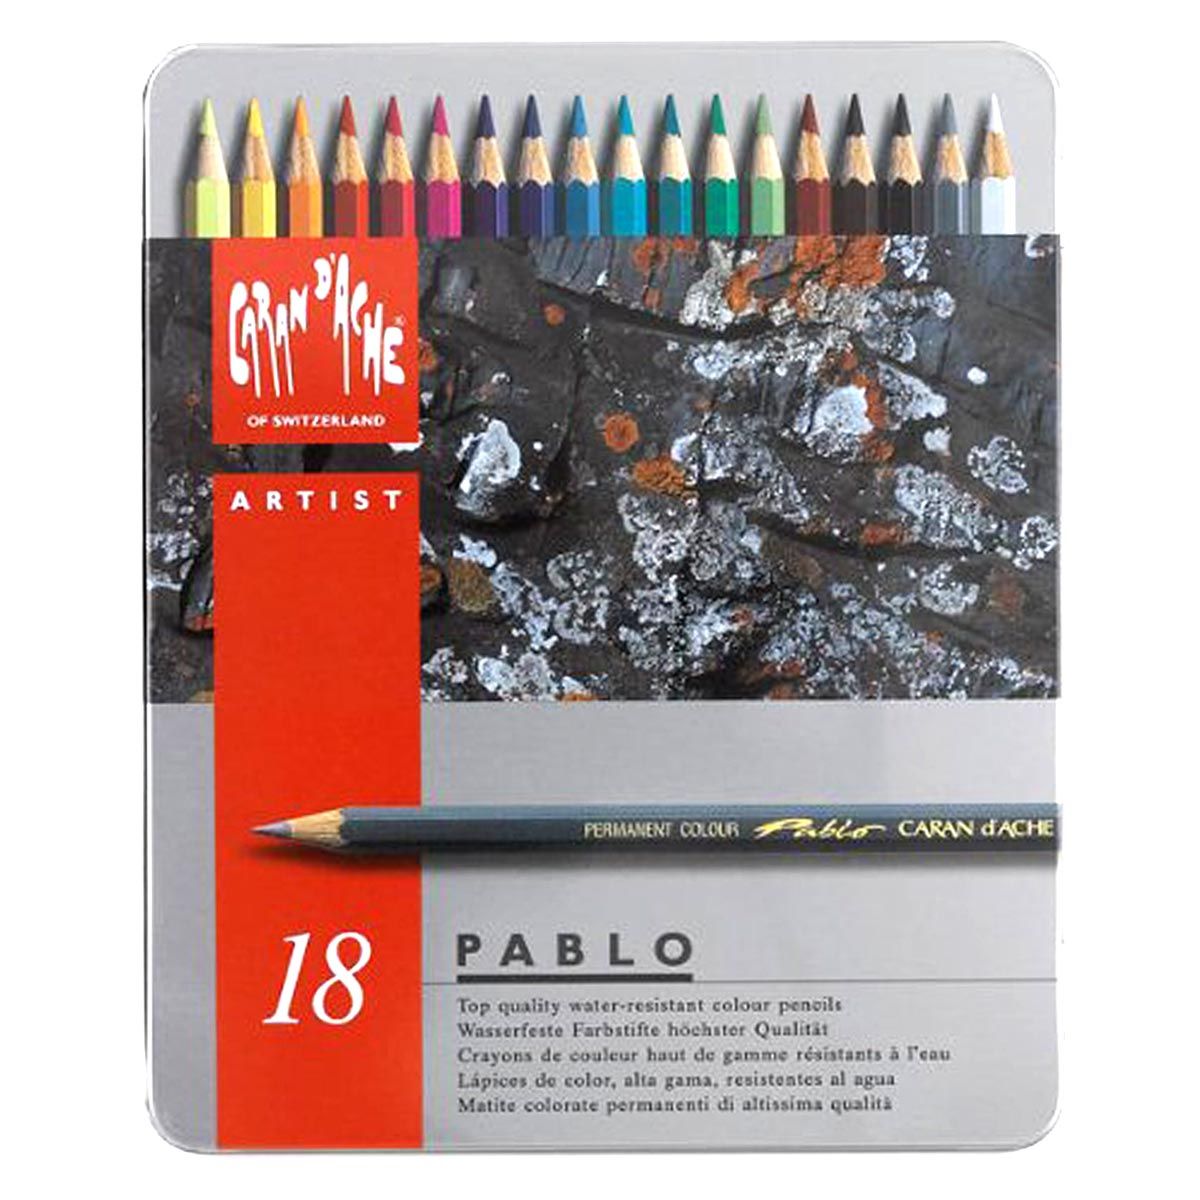 Caran d’Ache Pablo Coloured Pencil Metal Box Set of 18